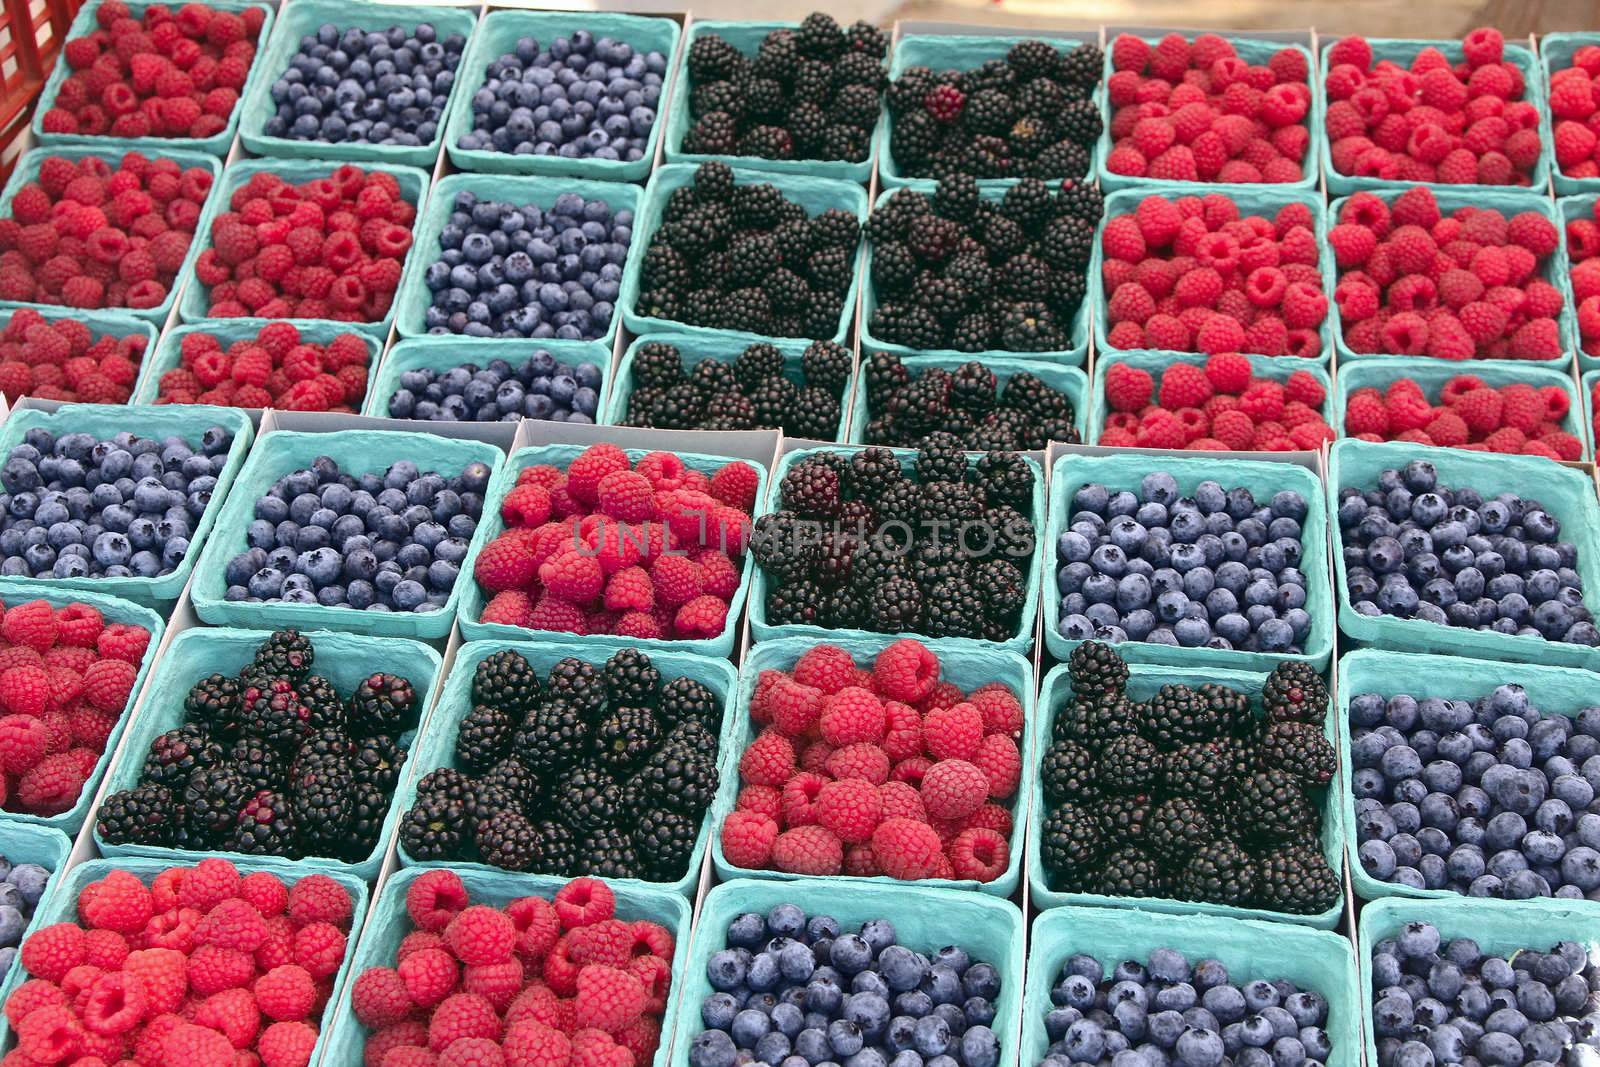 Blueberries, blackberries, and raspberries in cartons arranged for sale at farmers' market.